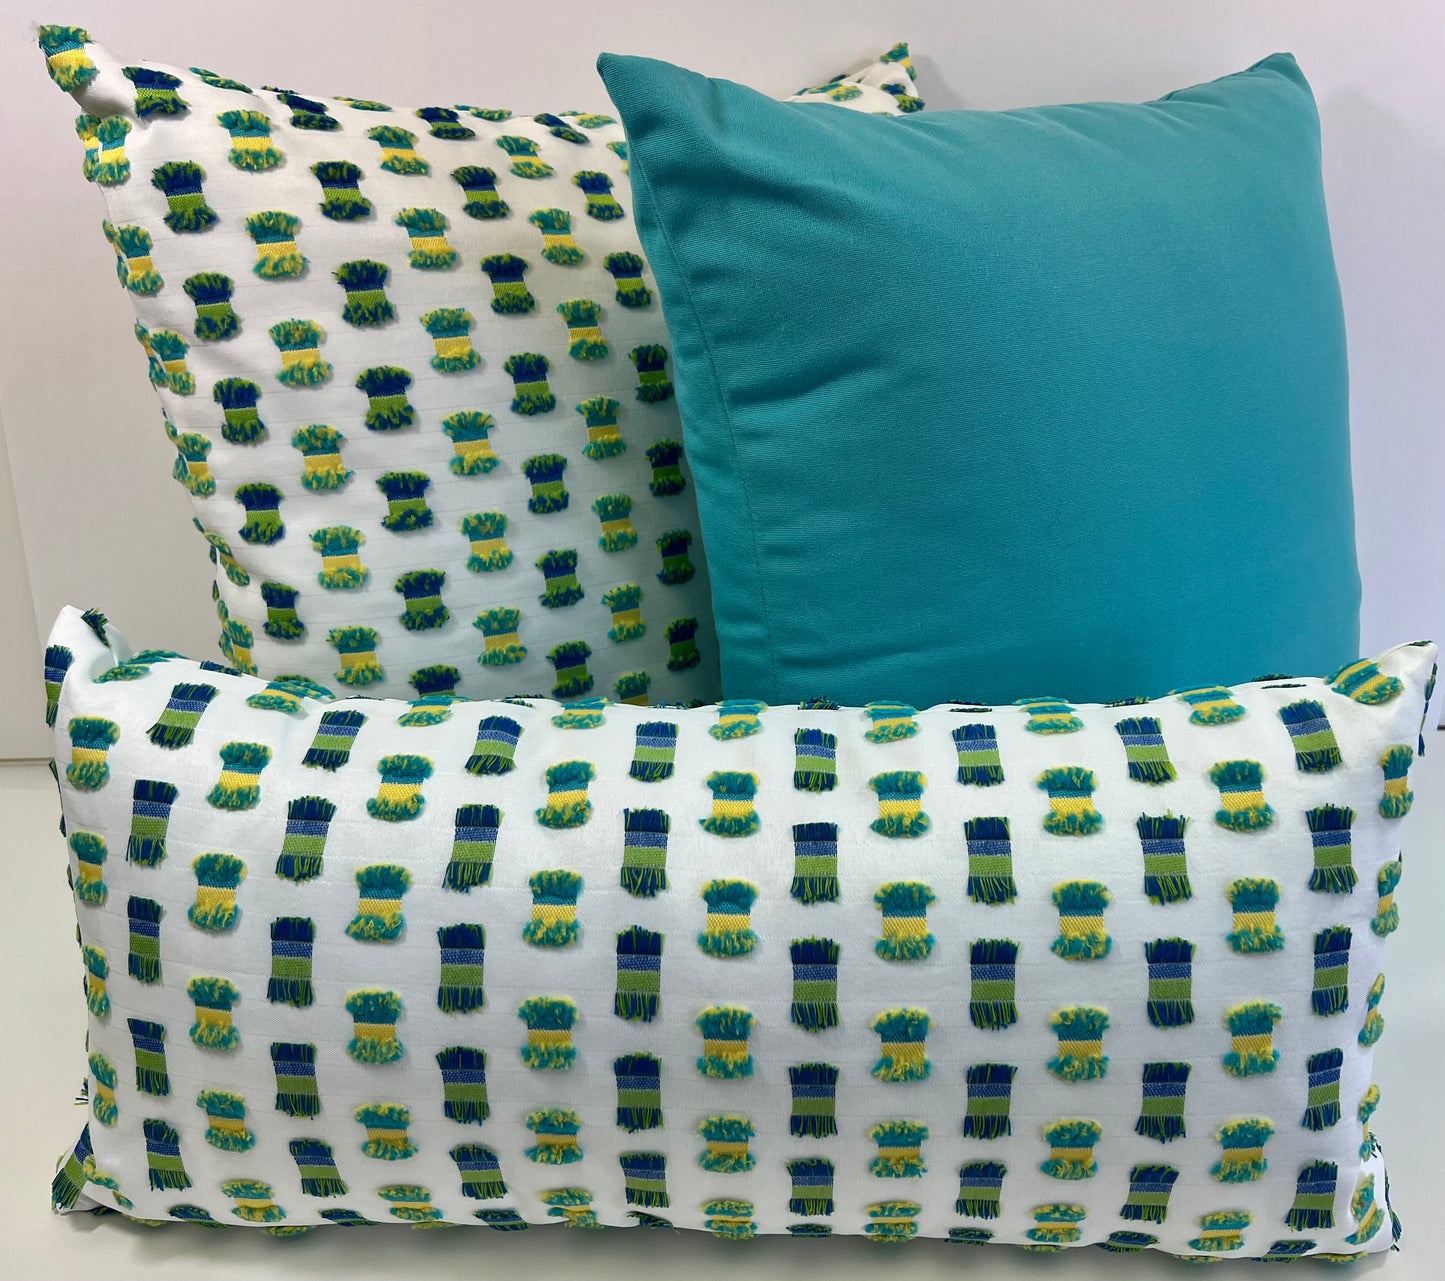 Luxury Outdoor Pillow - 22" x 22" - Saint Kitts - Aqua; Sunbrella, or equivalent, fabric with fiber fill